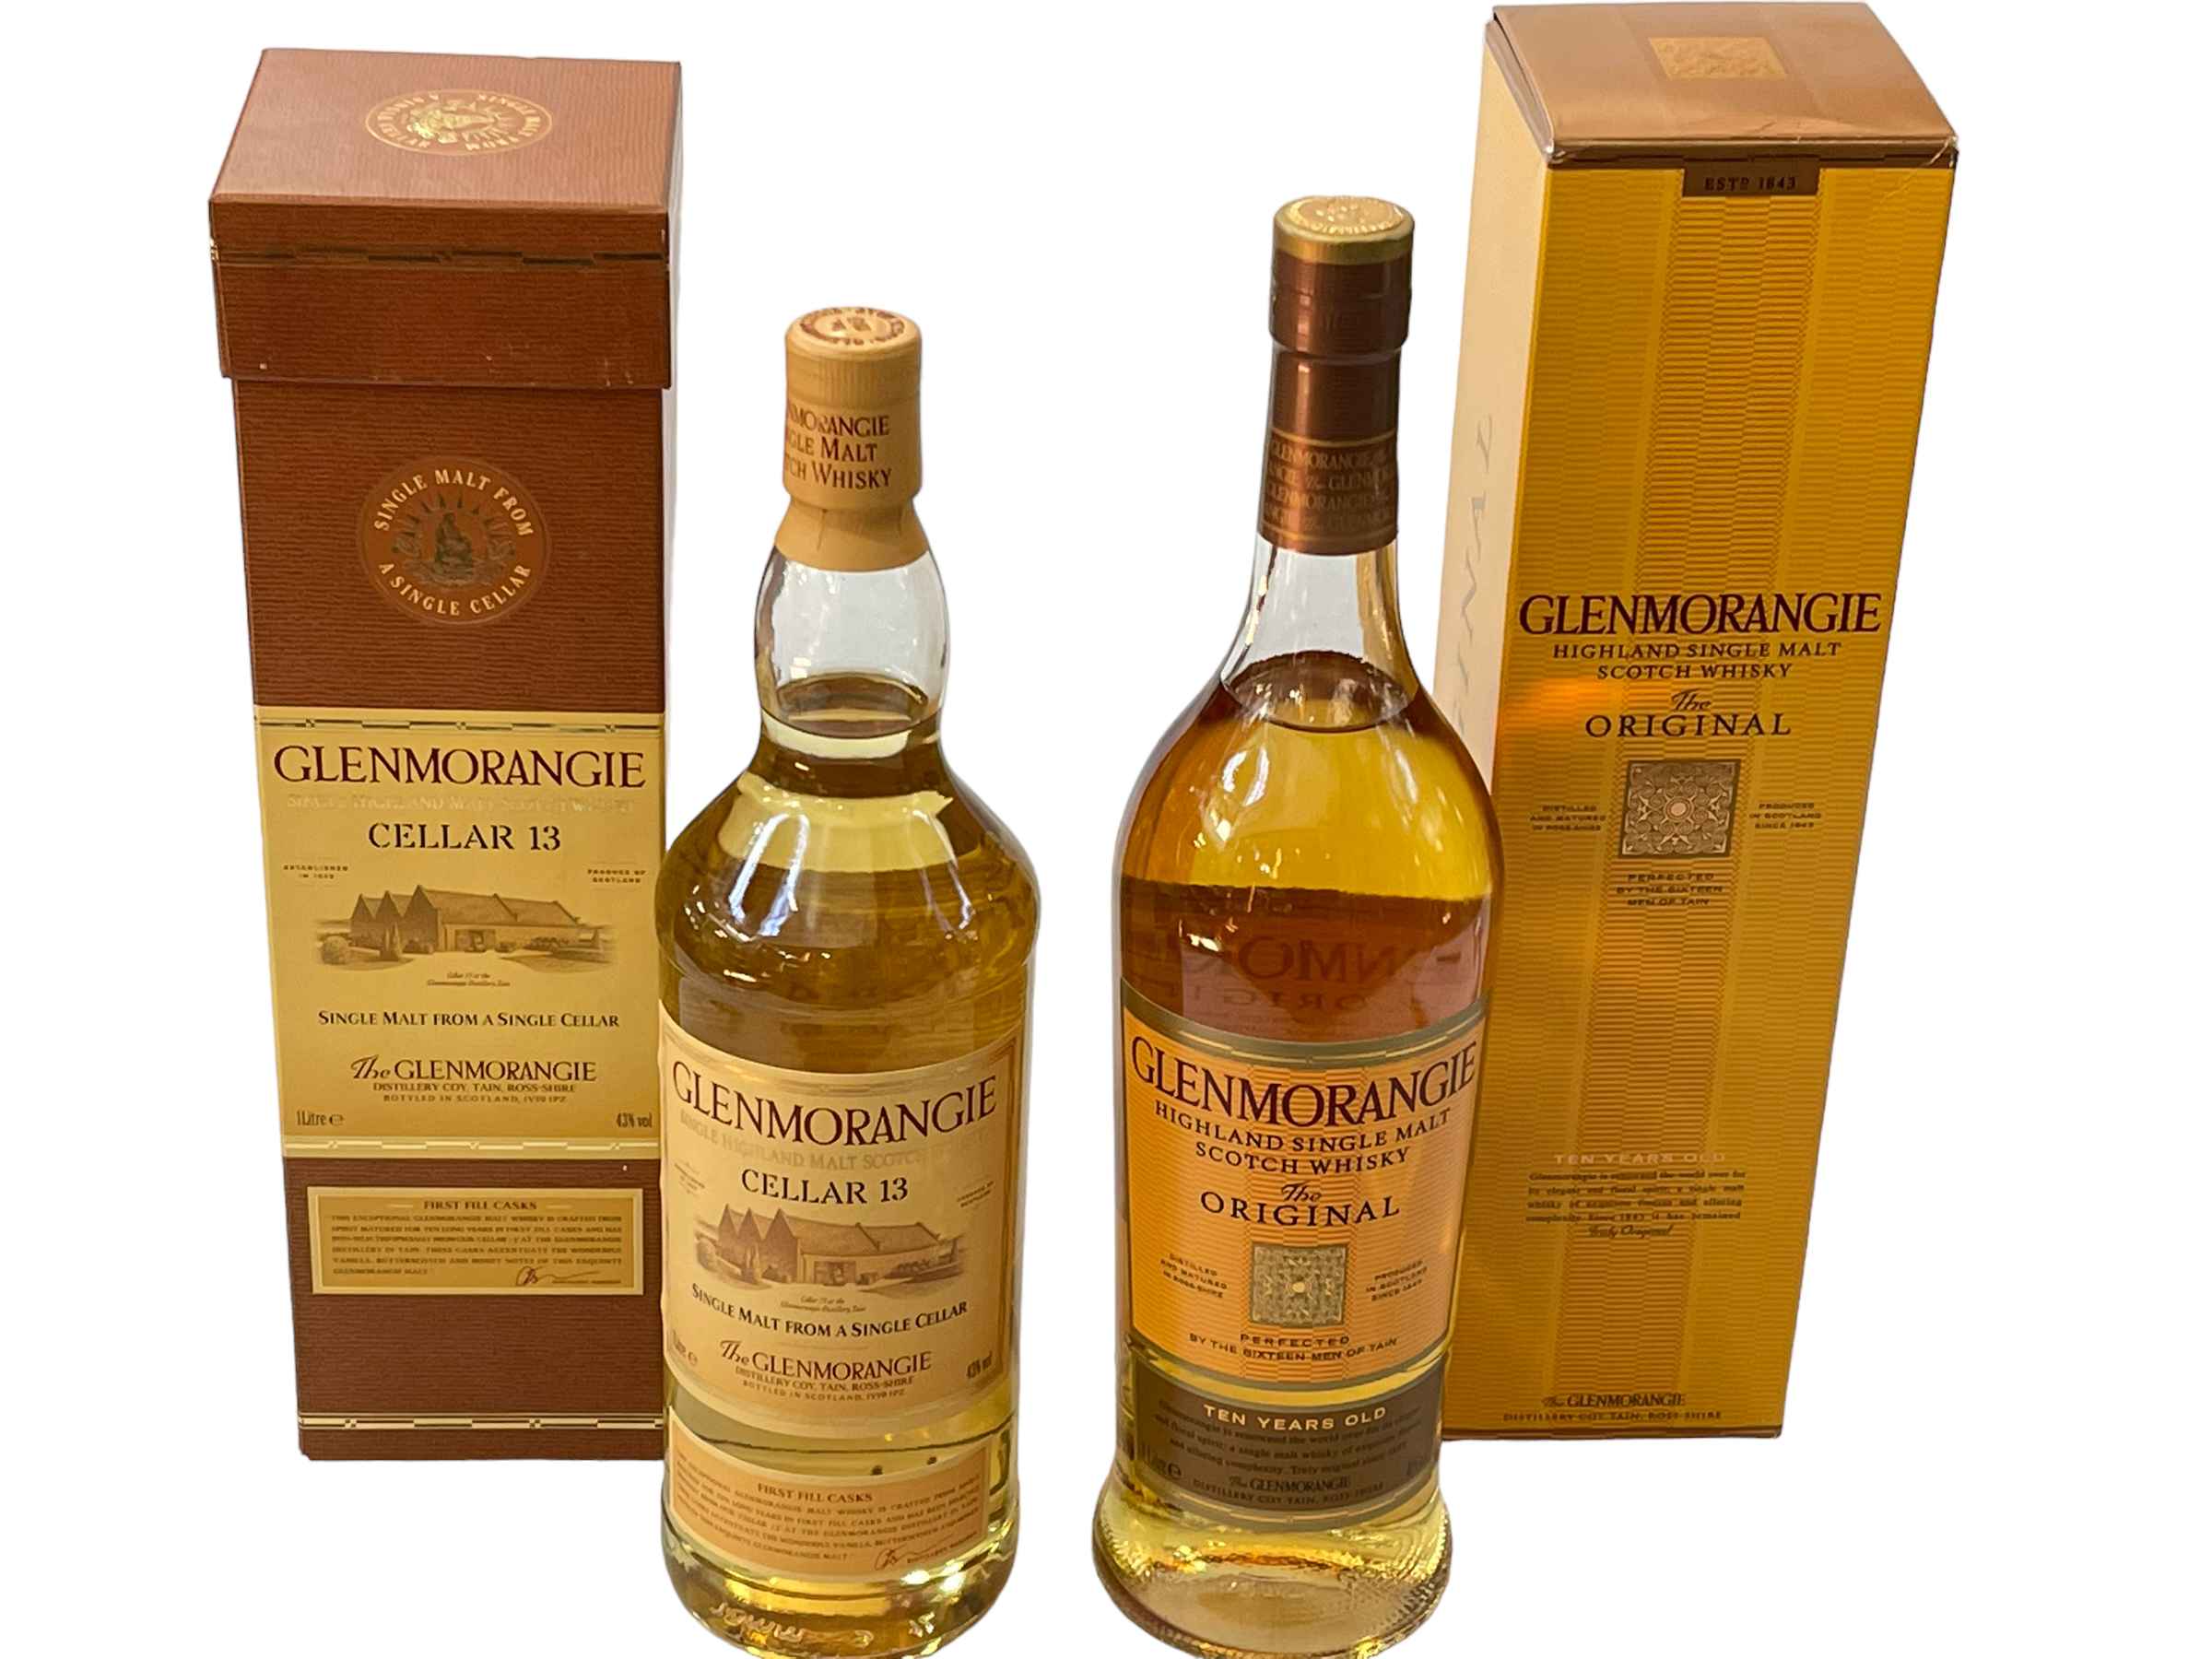 Two bottles of whisky, Glenmorangie Cellar 13, and Glenmorangie Original 10 years, both boxed.